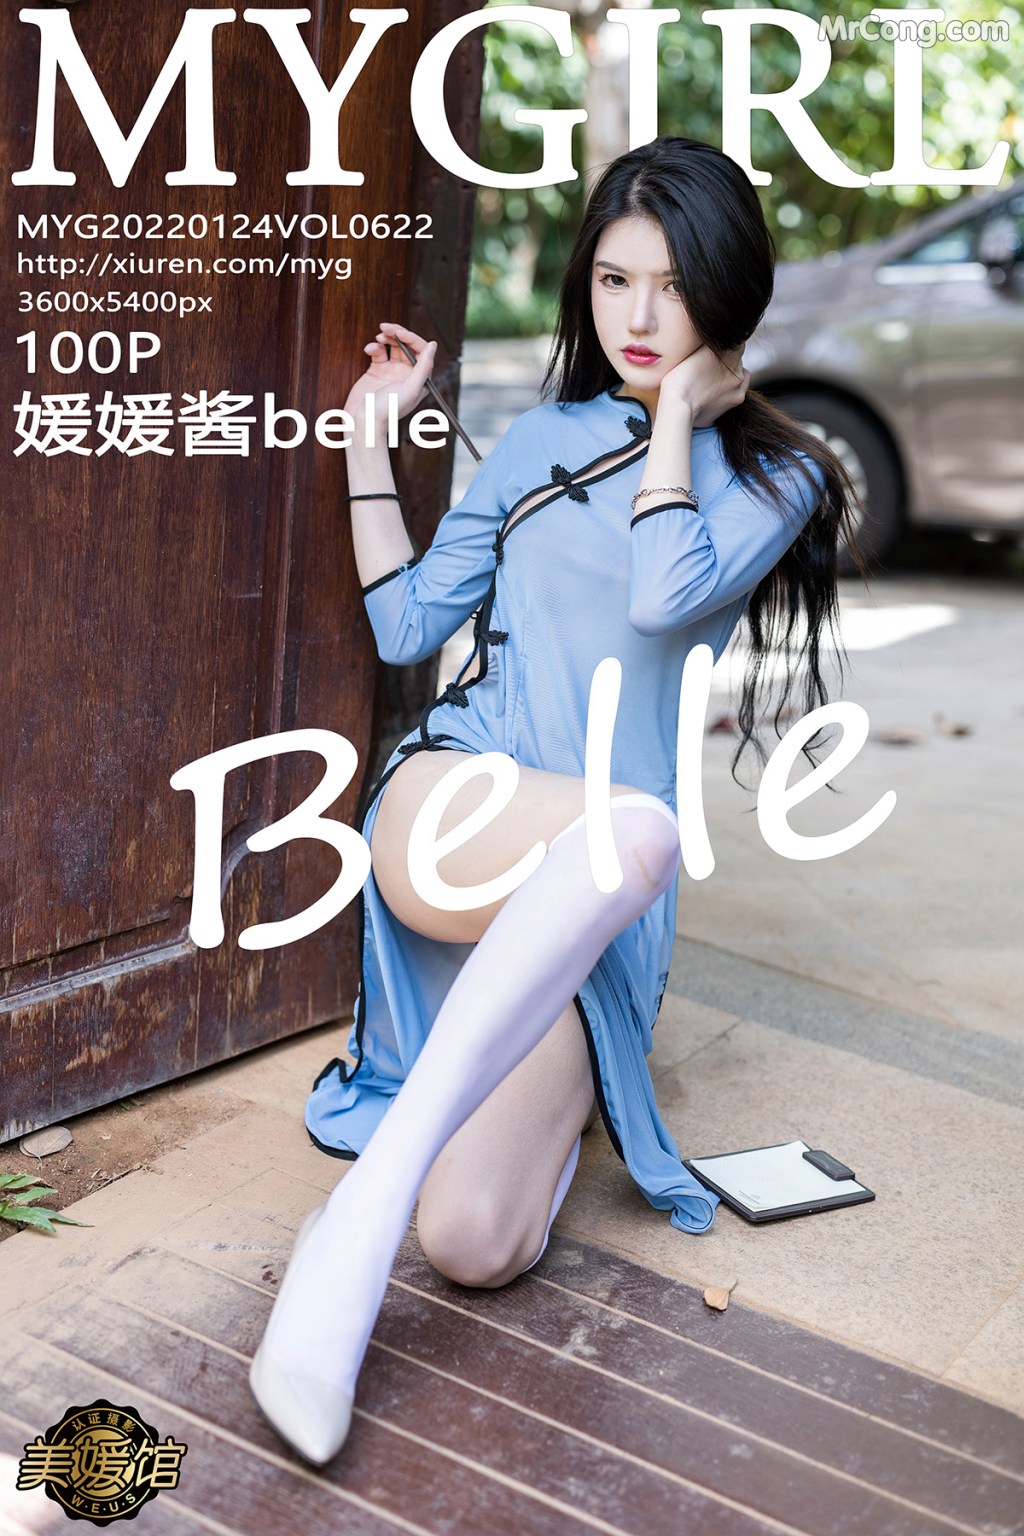 MyGirl Vol.622: 媛媛酱belle (101 photos)